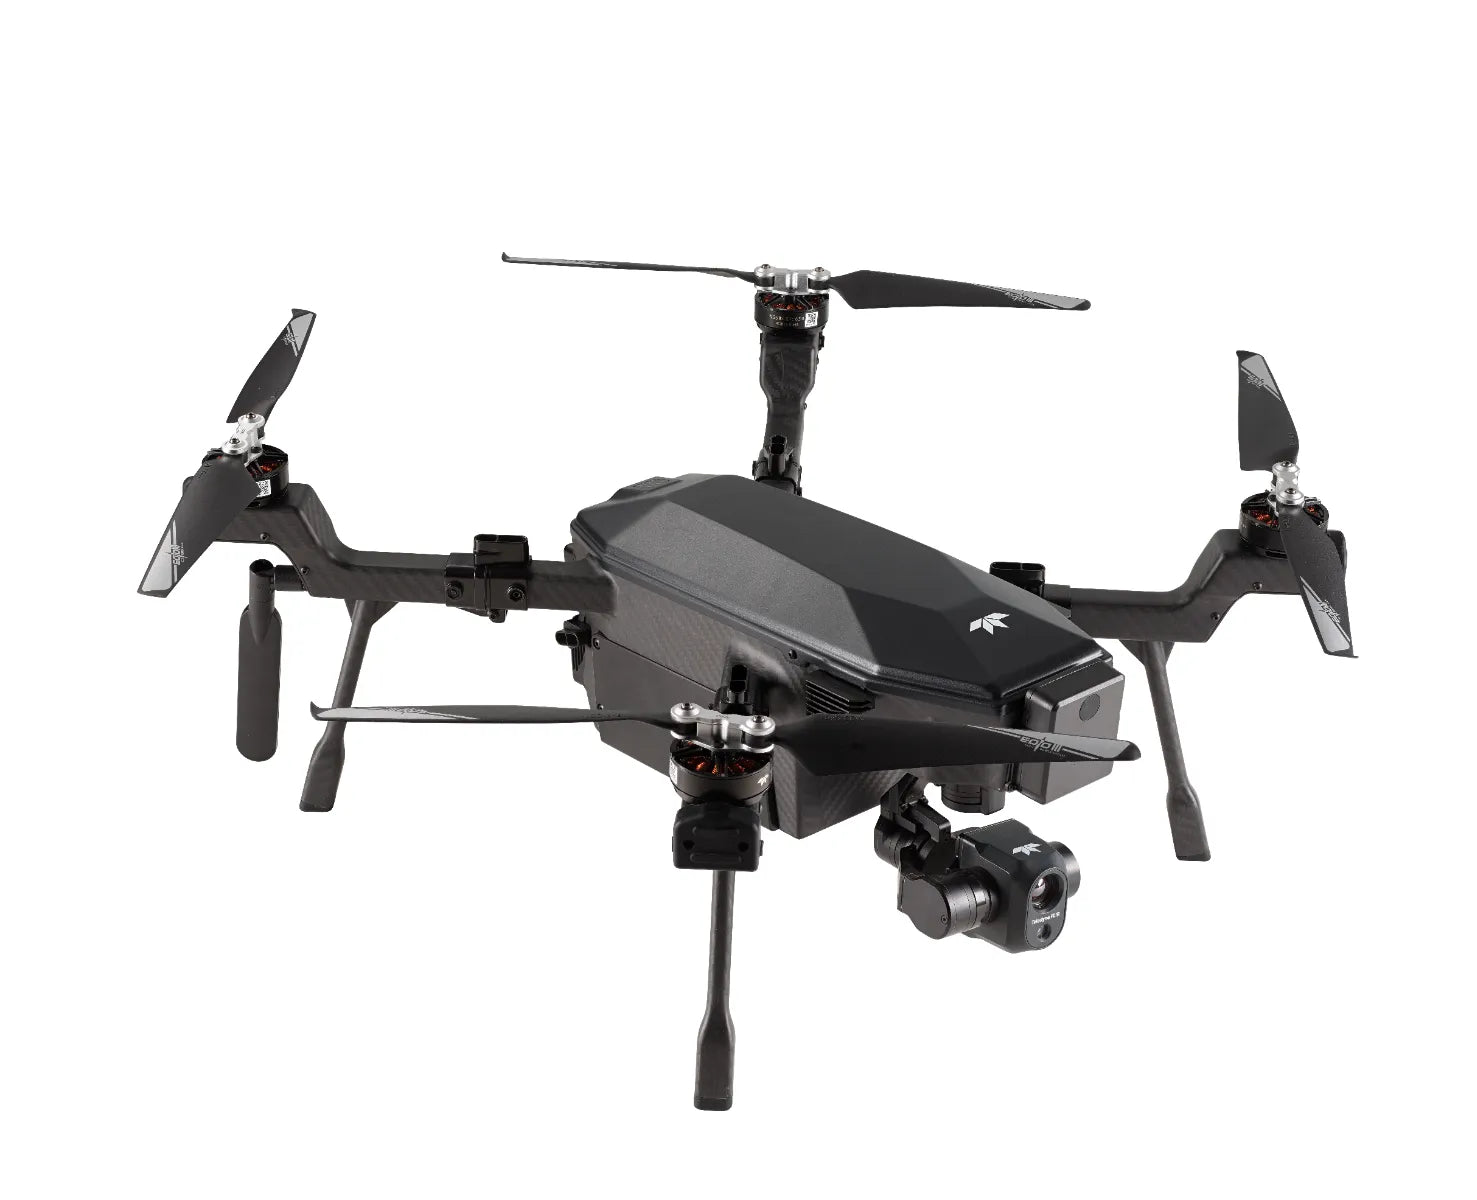 Teledyne FLIR SIRAS - FLIR Thermal and Visible Camera Payload Drone